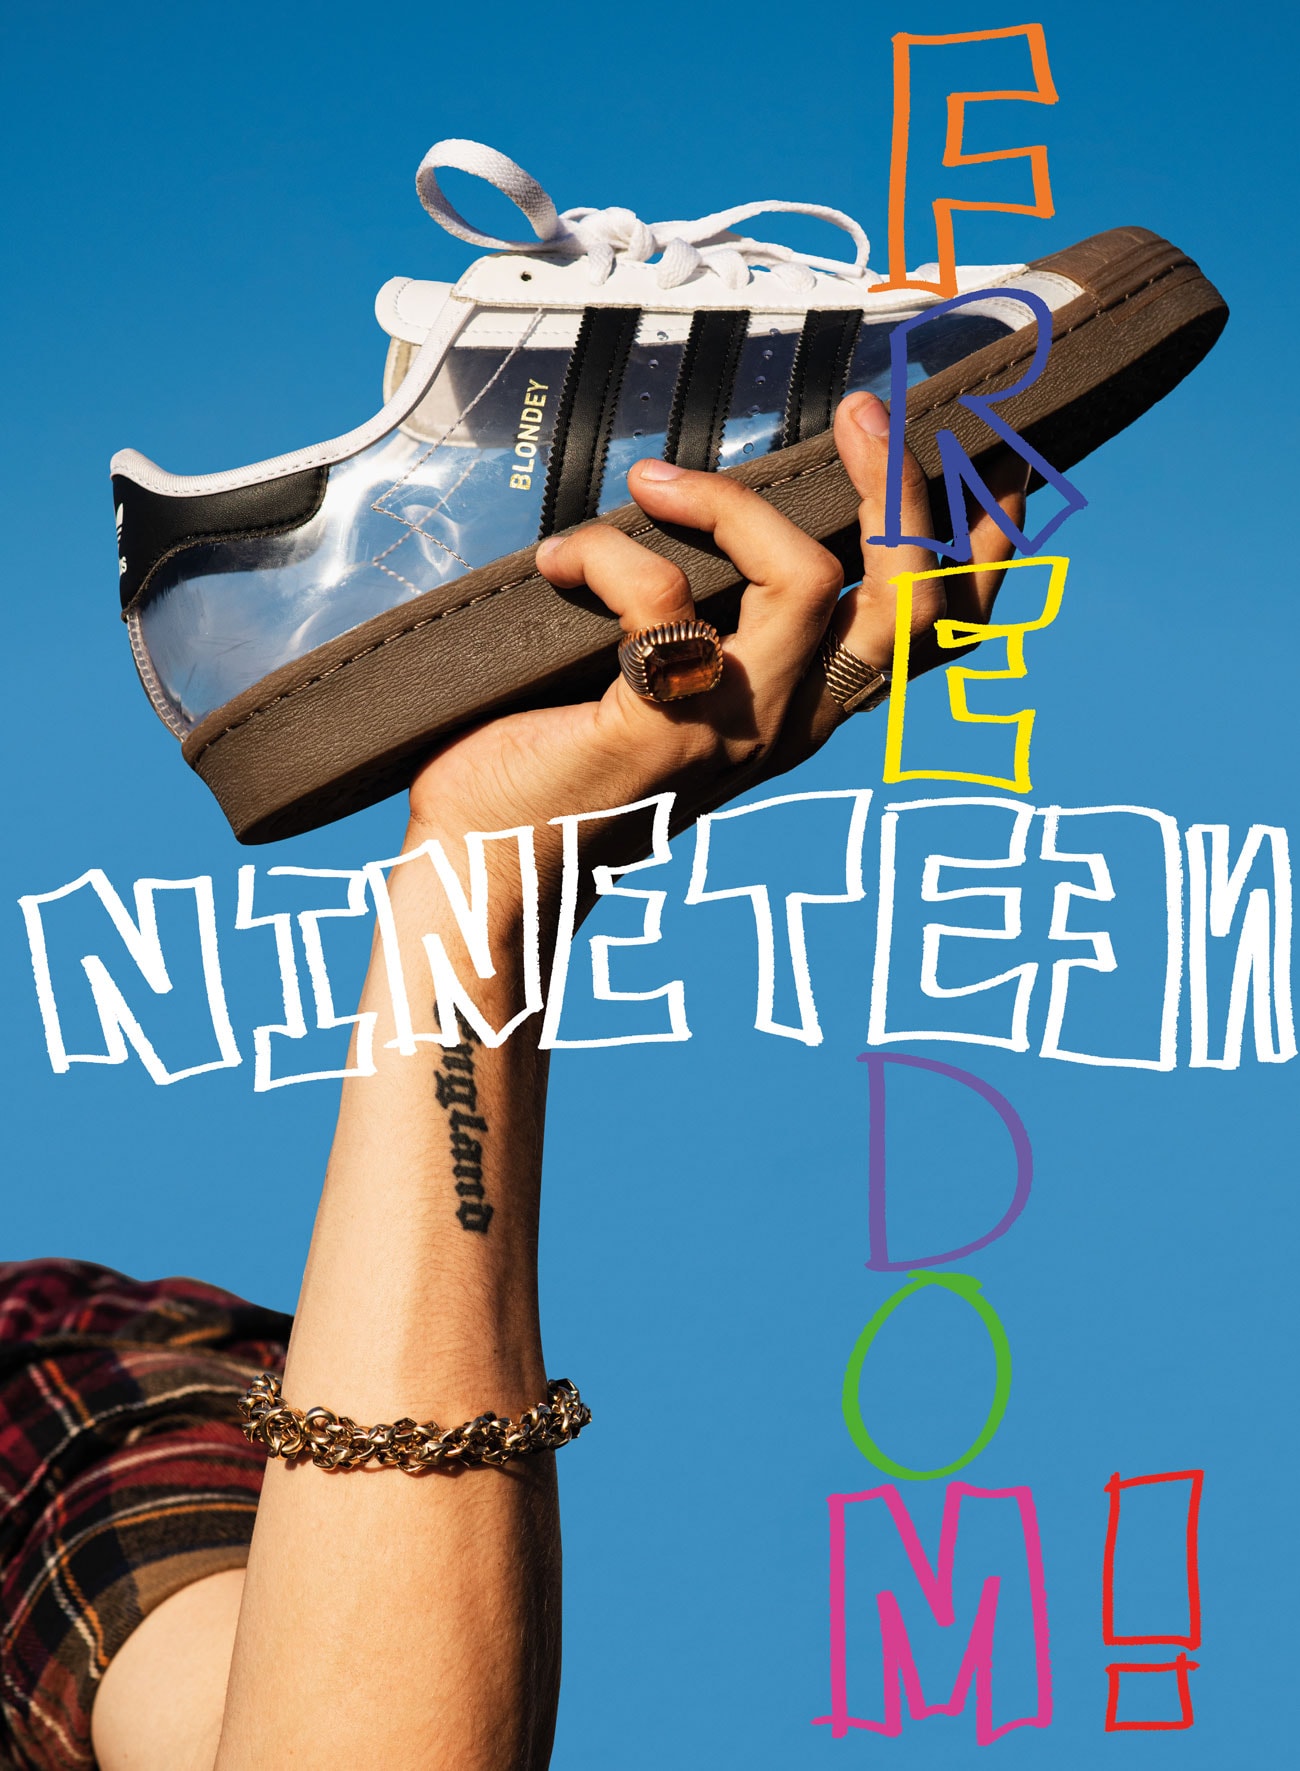 blondey mccoy freedom nineteen zine idea now adidas superstar skateboarding books publications